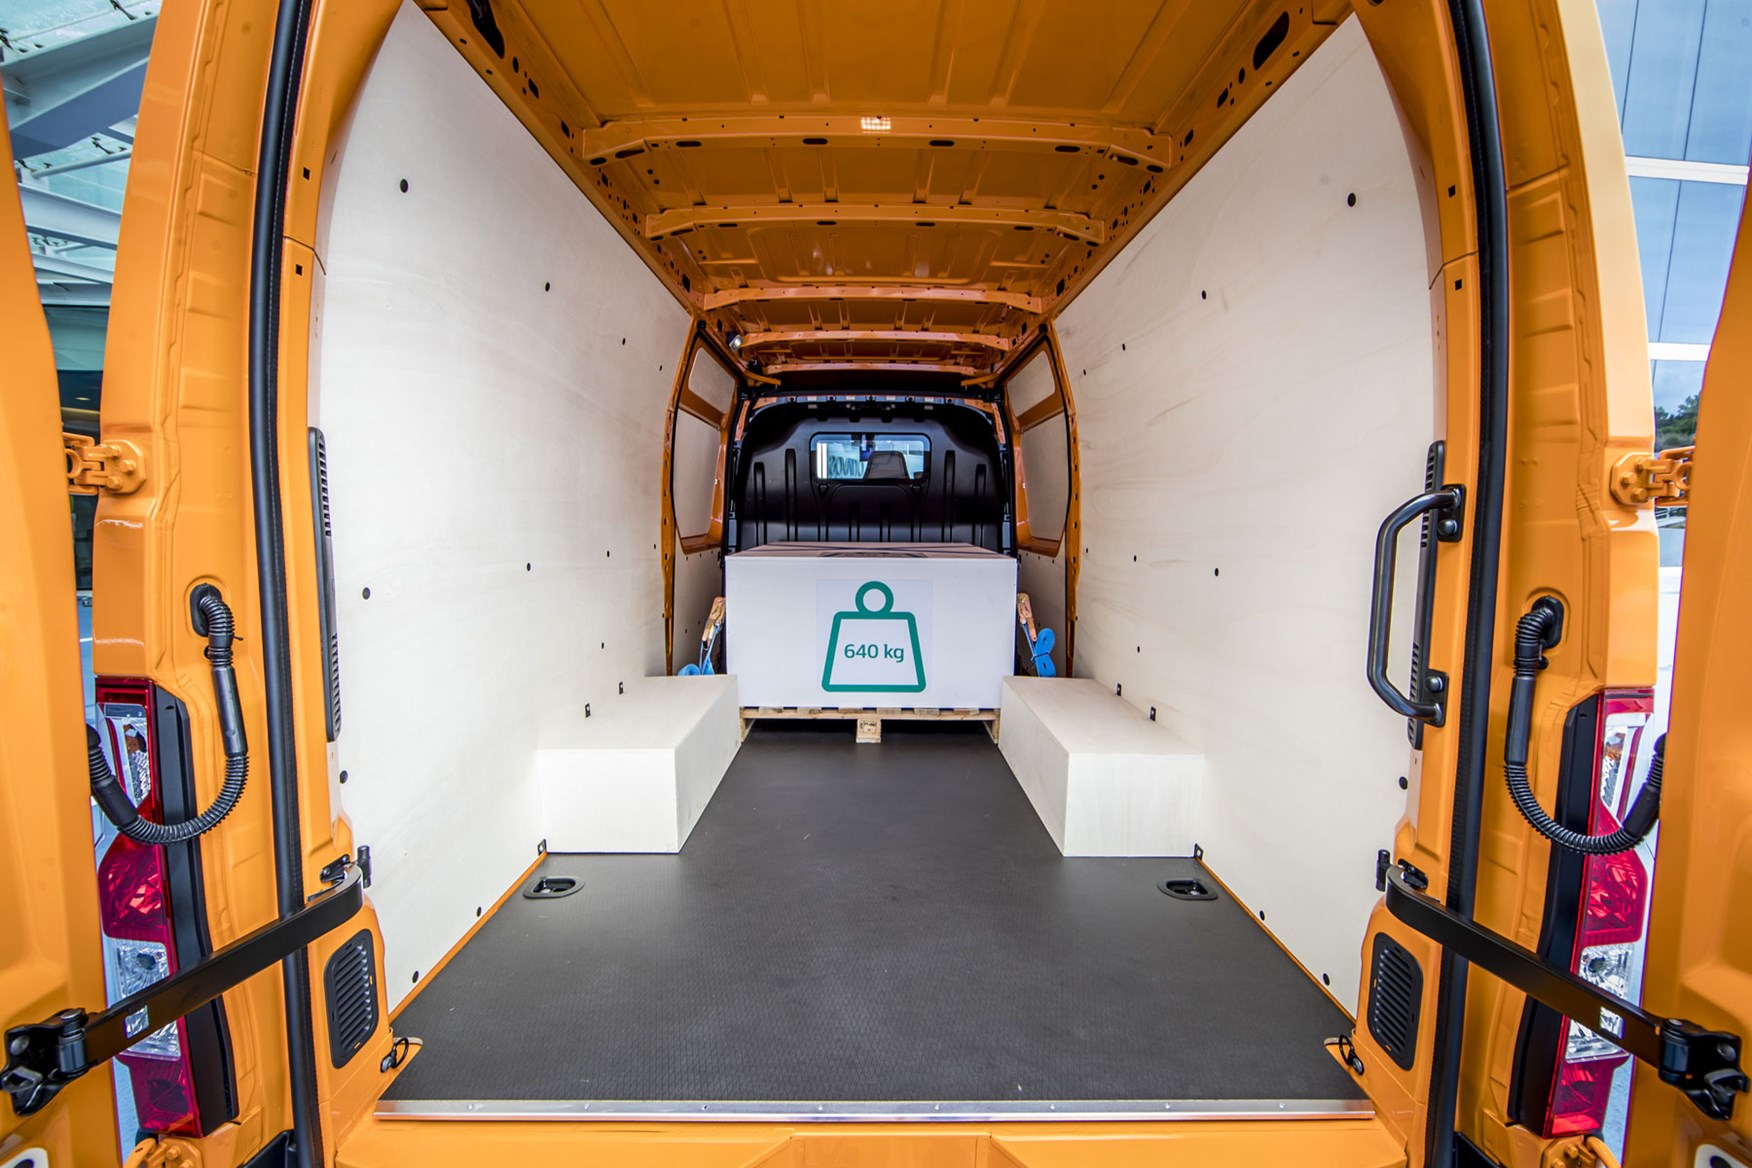 Renault Master dimension, 2019 facelift model, load area seen through rear doors, orange